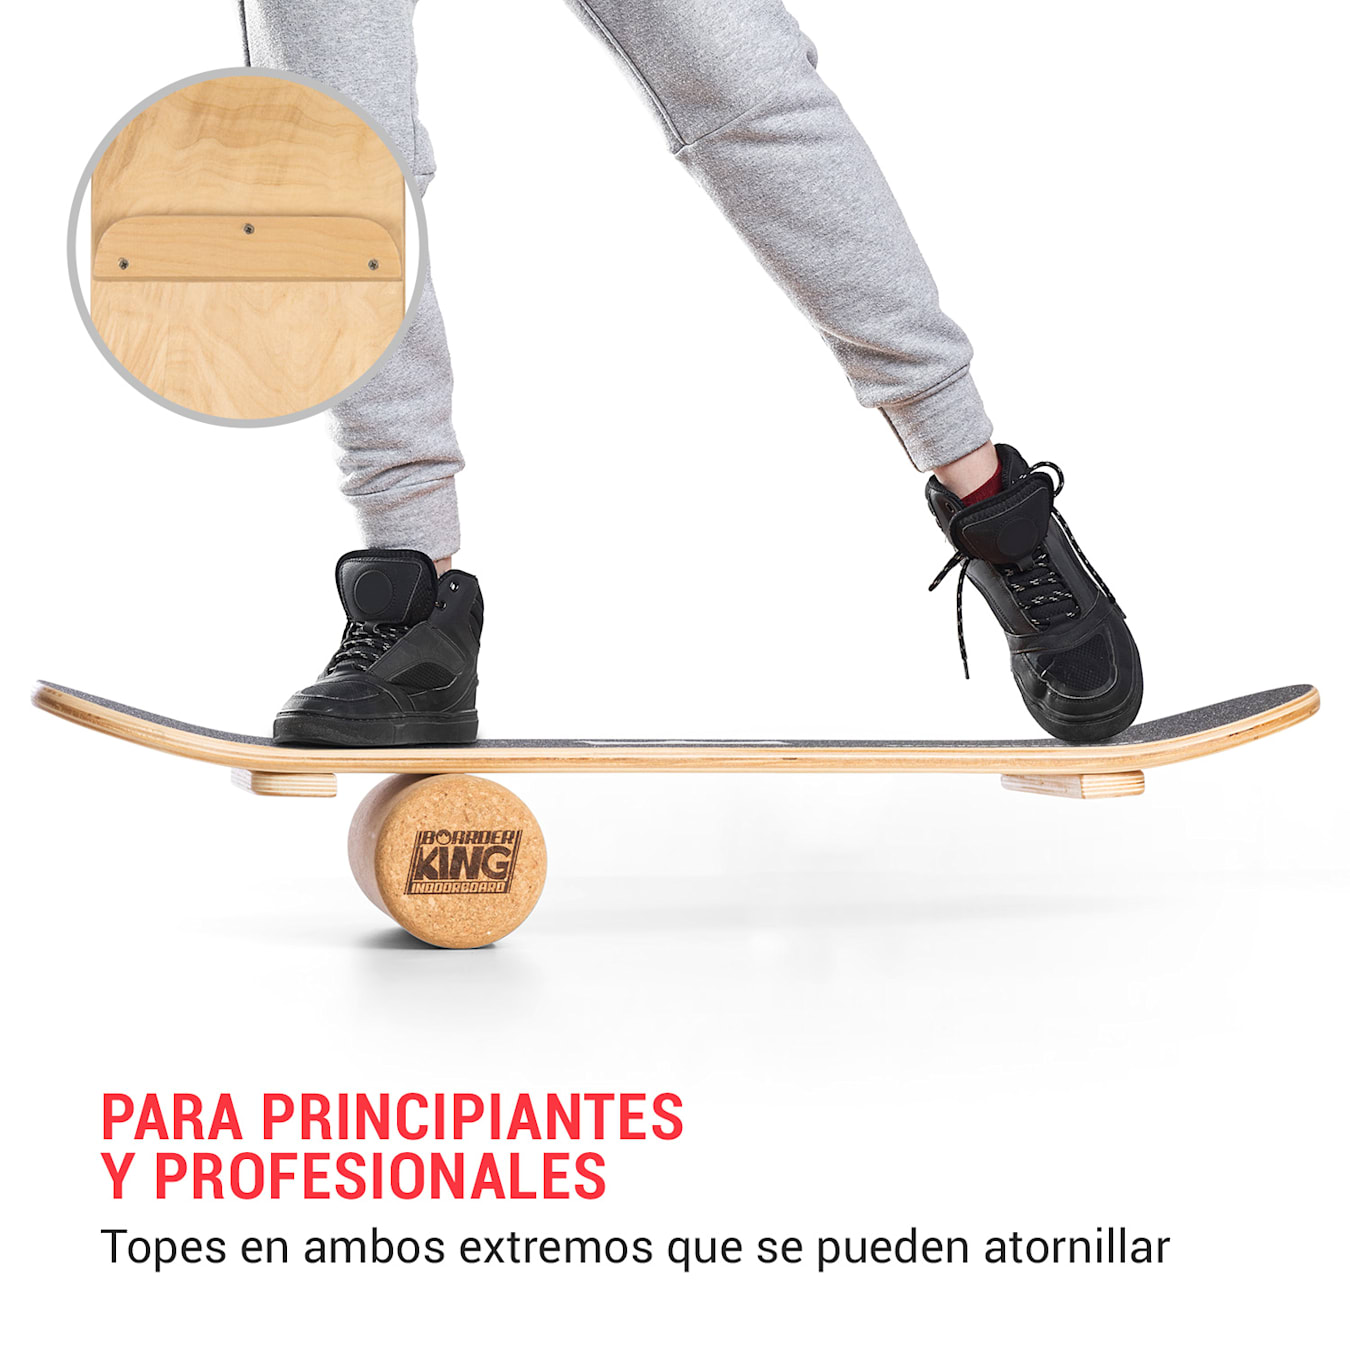 Indoorboard Skate Tabla de equilibro Esterilla + Rodillo Madera/Corcho Negra